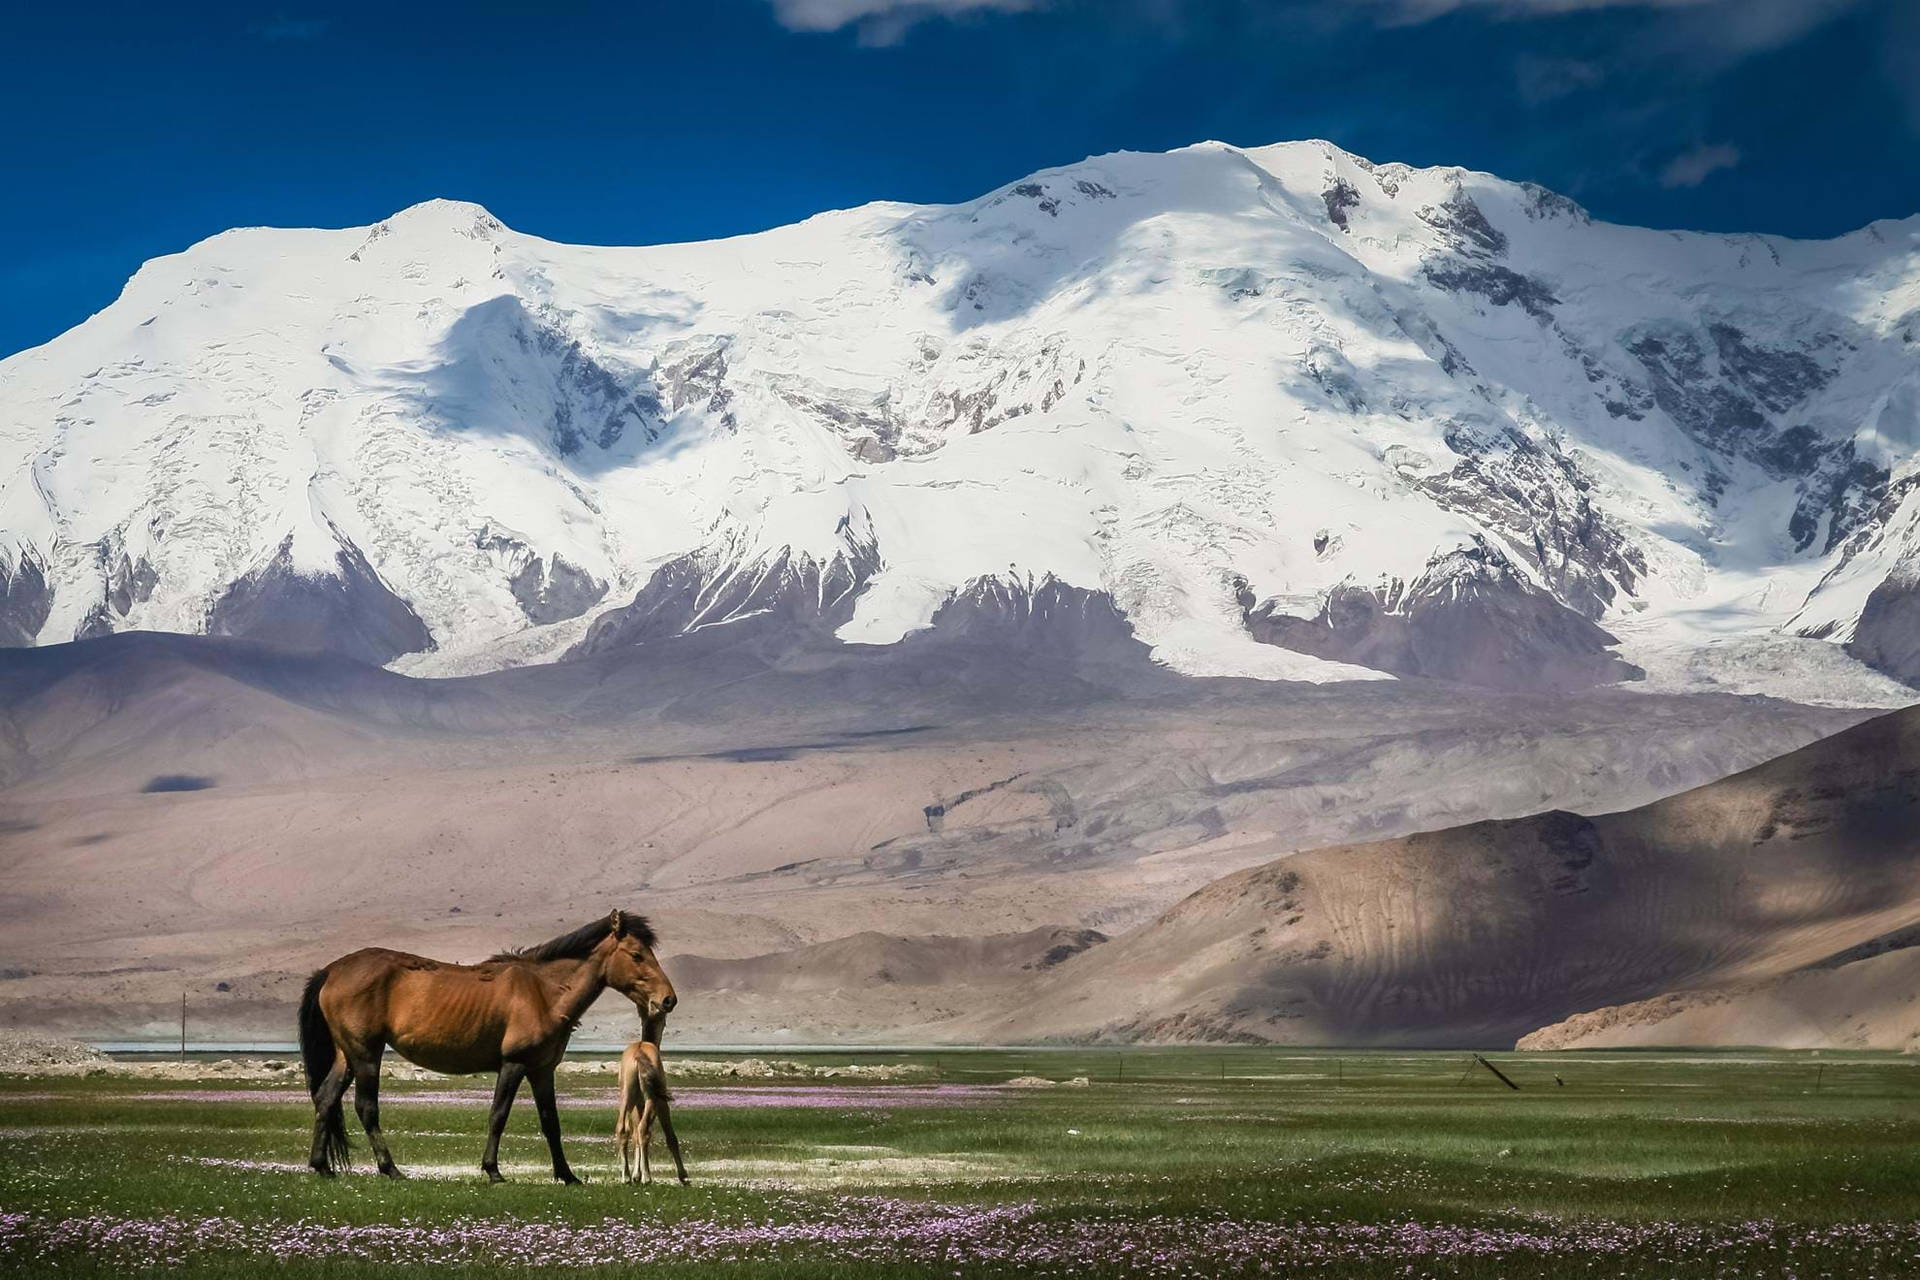 Khustain Nuruu Mongolia Background